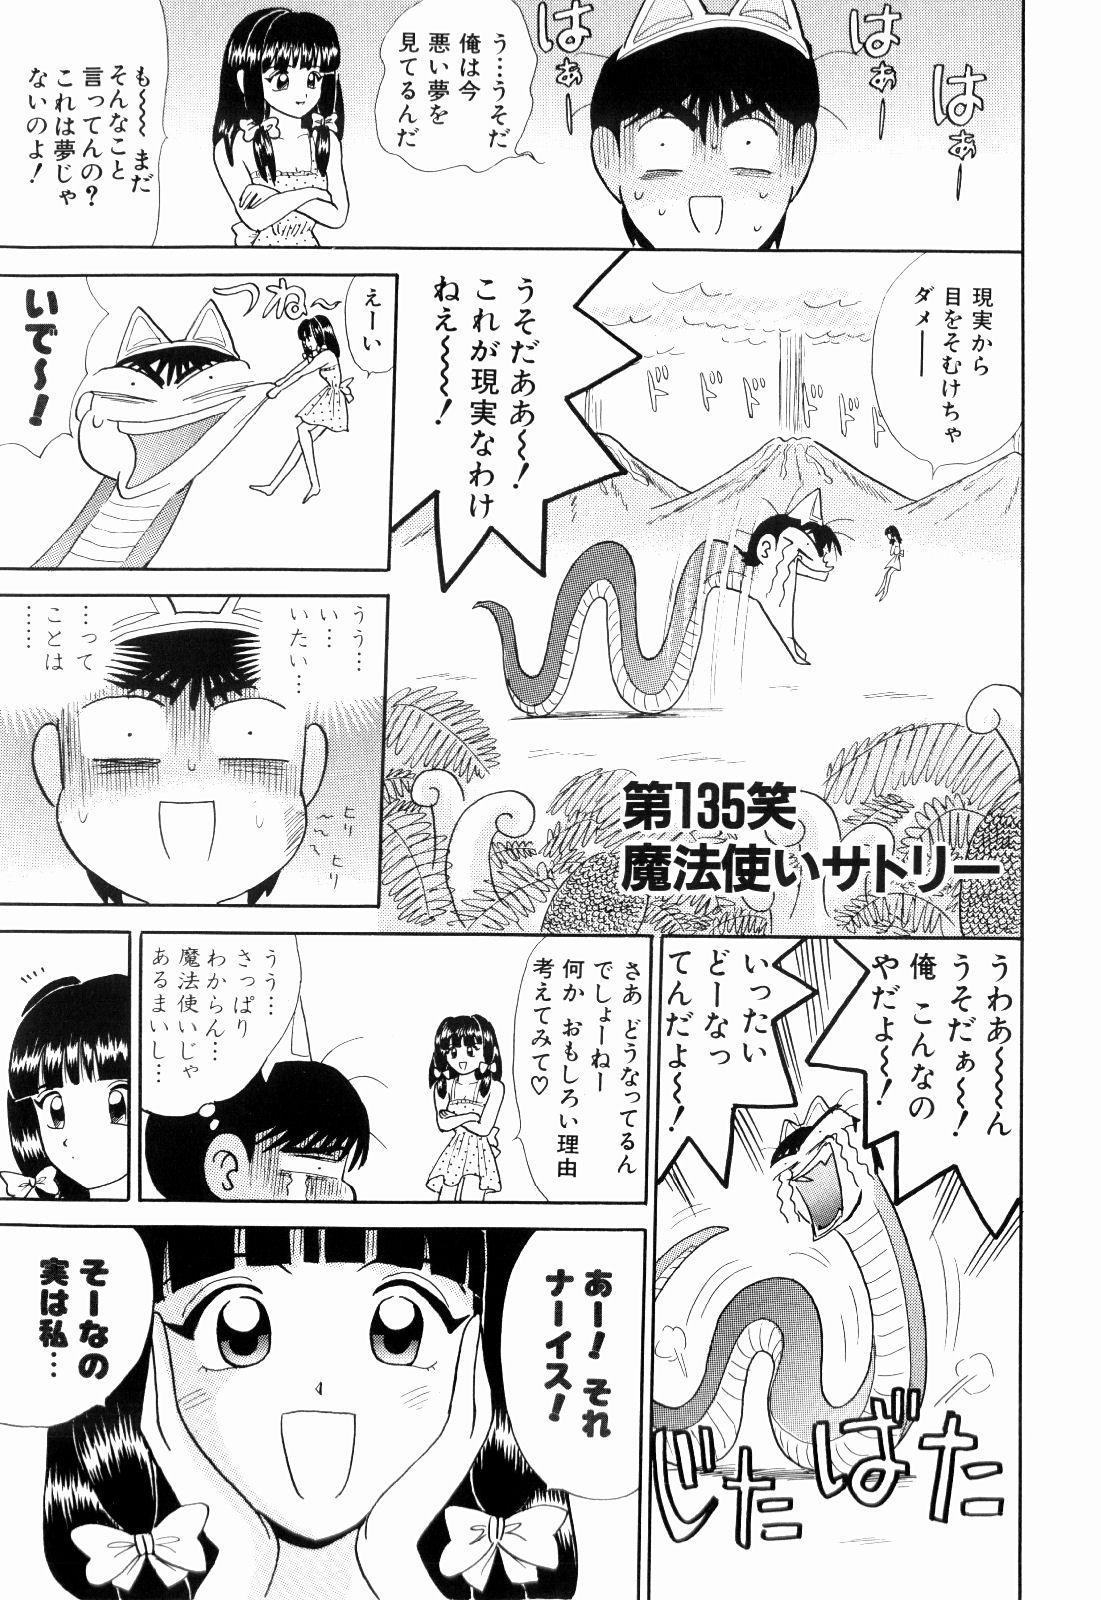 Bald Pussy Kenjiro Kakimoto - Futari Kurashi 11 Exibicionismo - Page 5